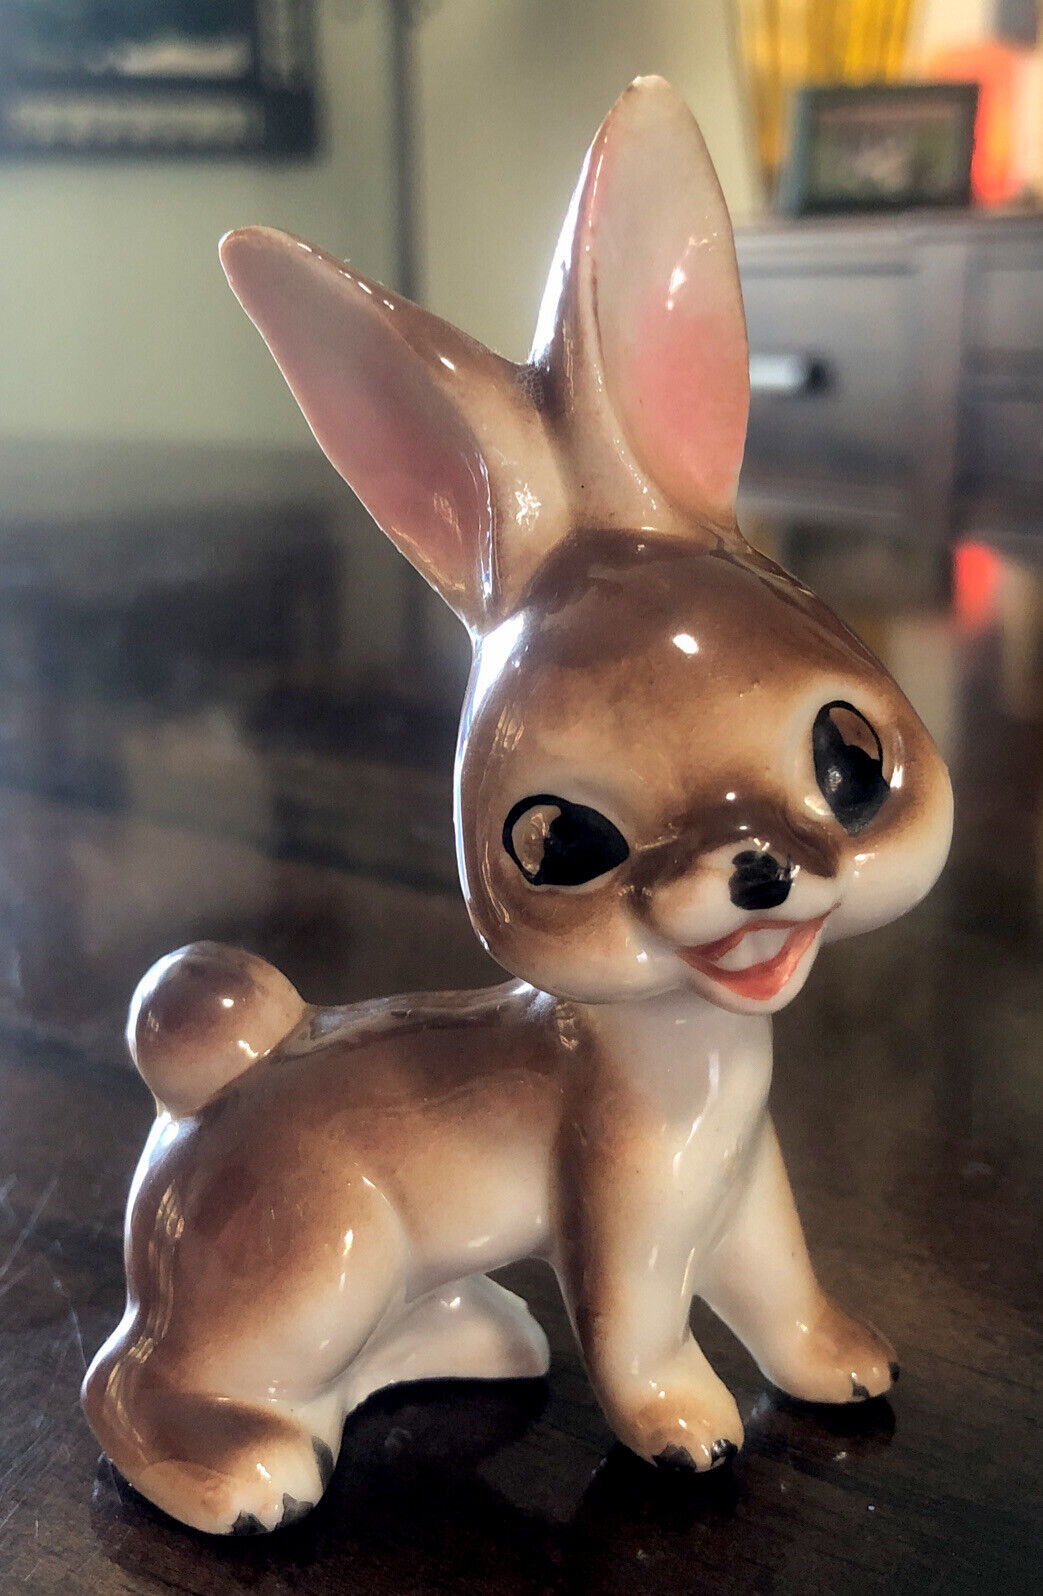 Vintage Japan Anthropomorphic Bunny Figurine Kitschy Kawaii Rabbit Easter 50s